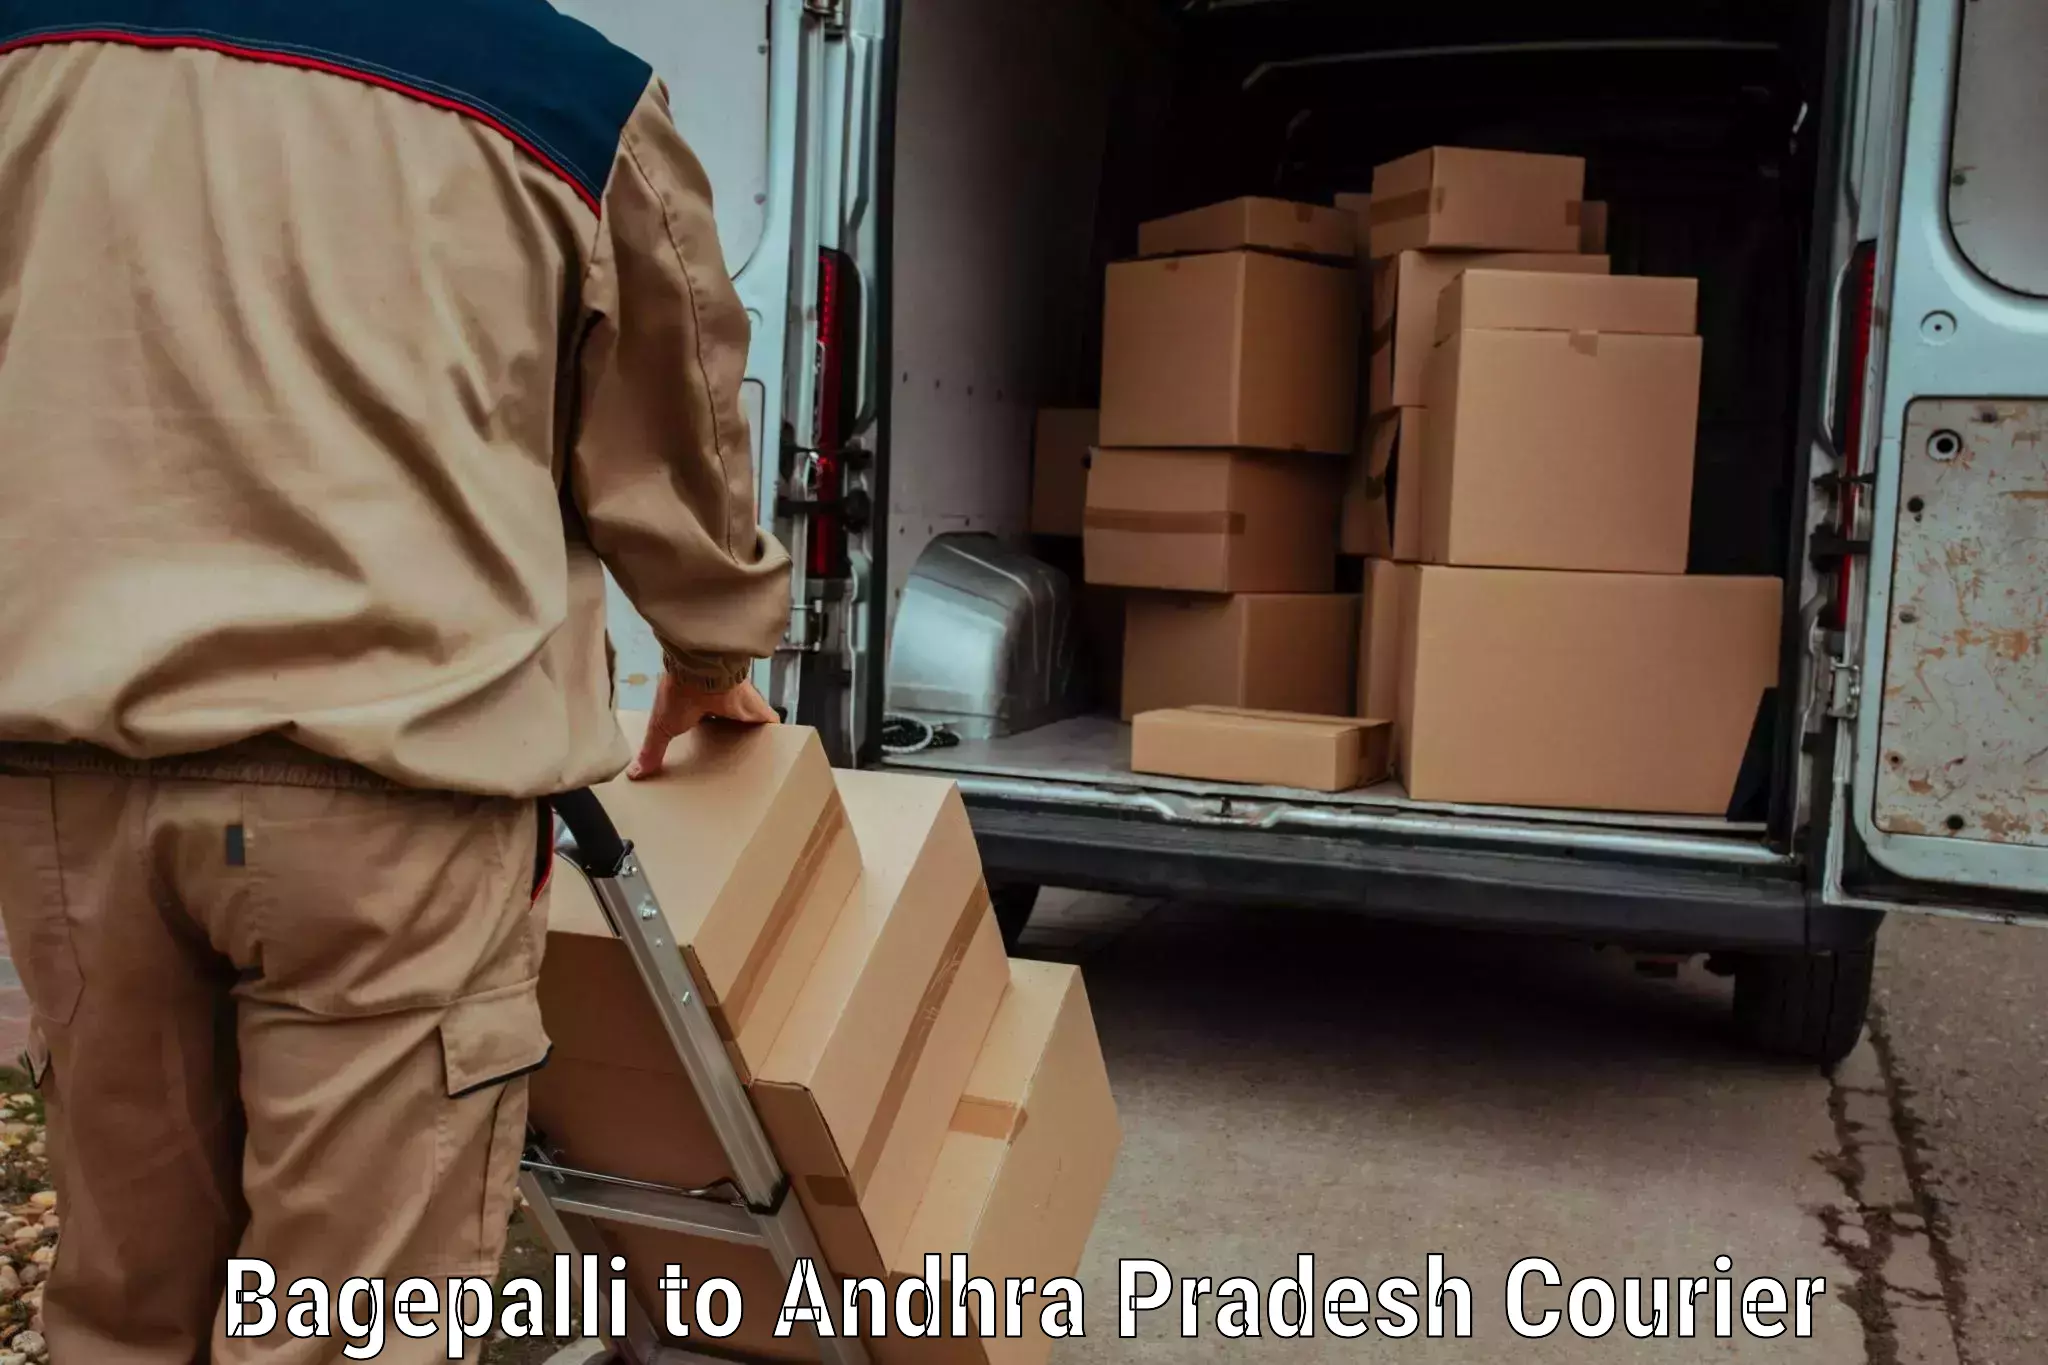 Courier service partnerships Bagepalli to Velgodu